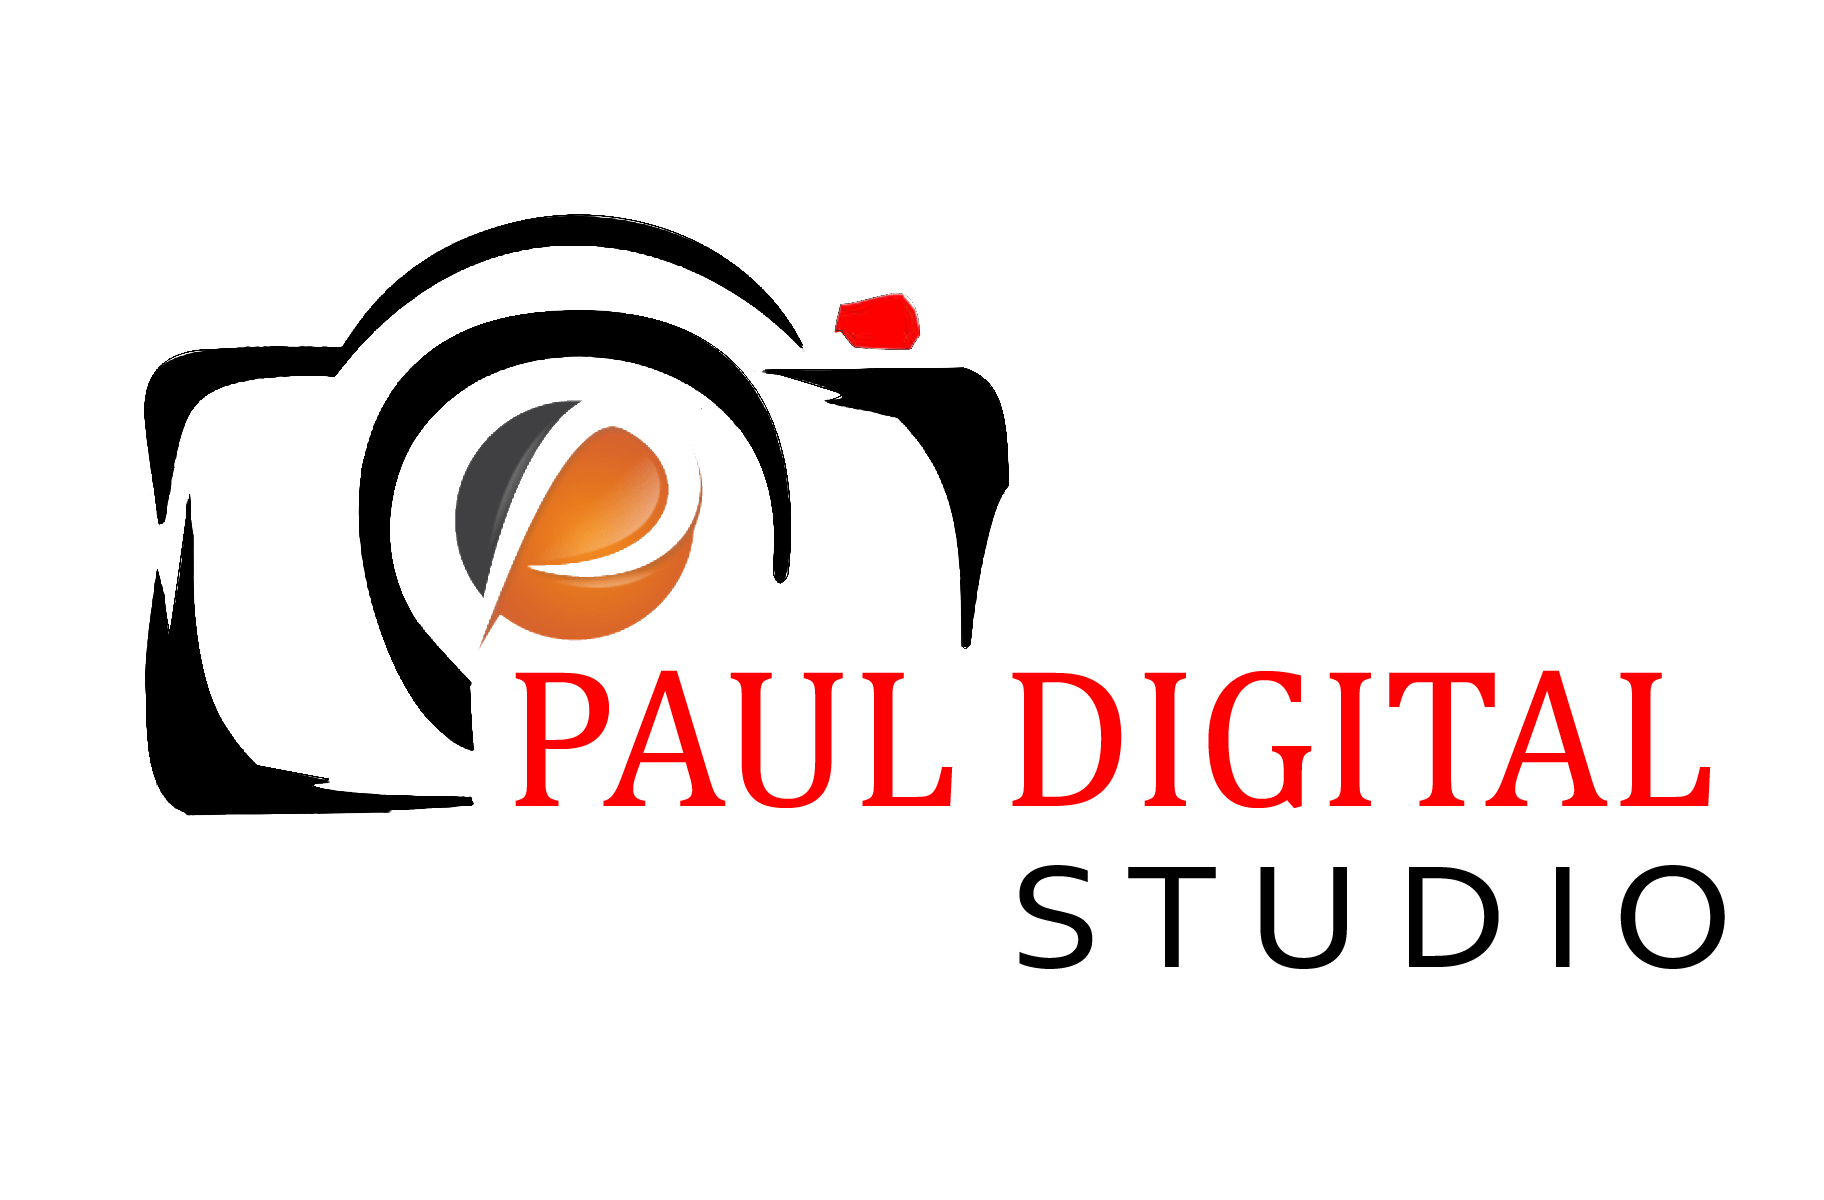 Photography Studio Logo - Photography studio logo png PNG Image